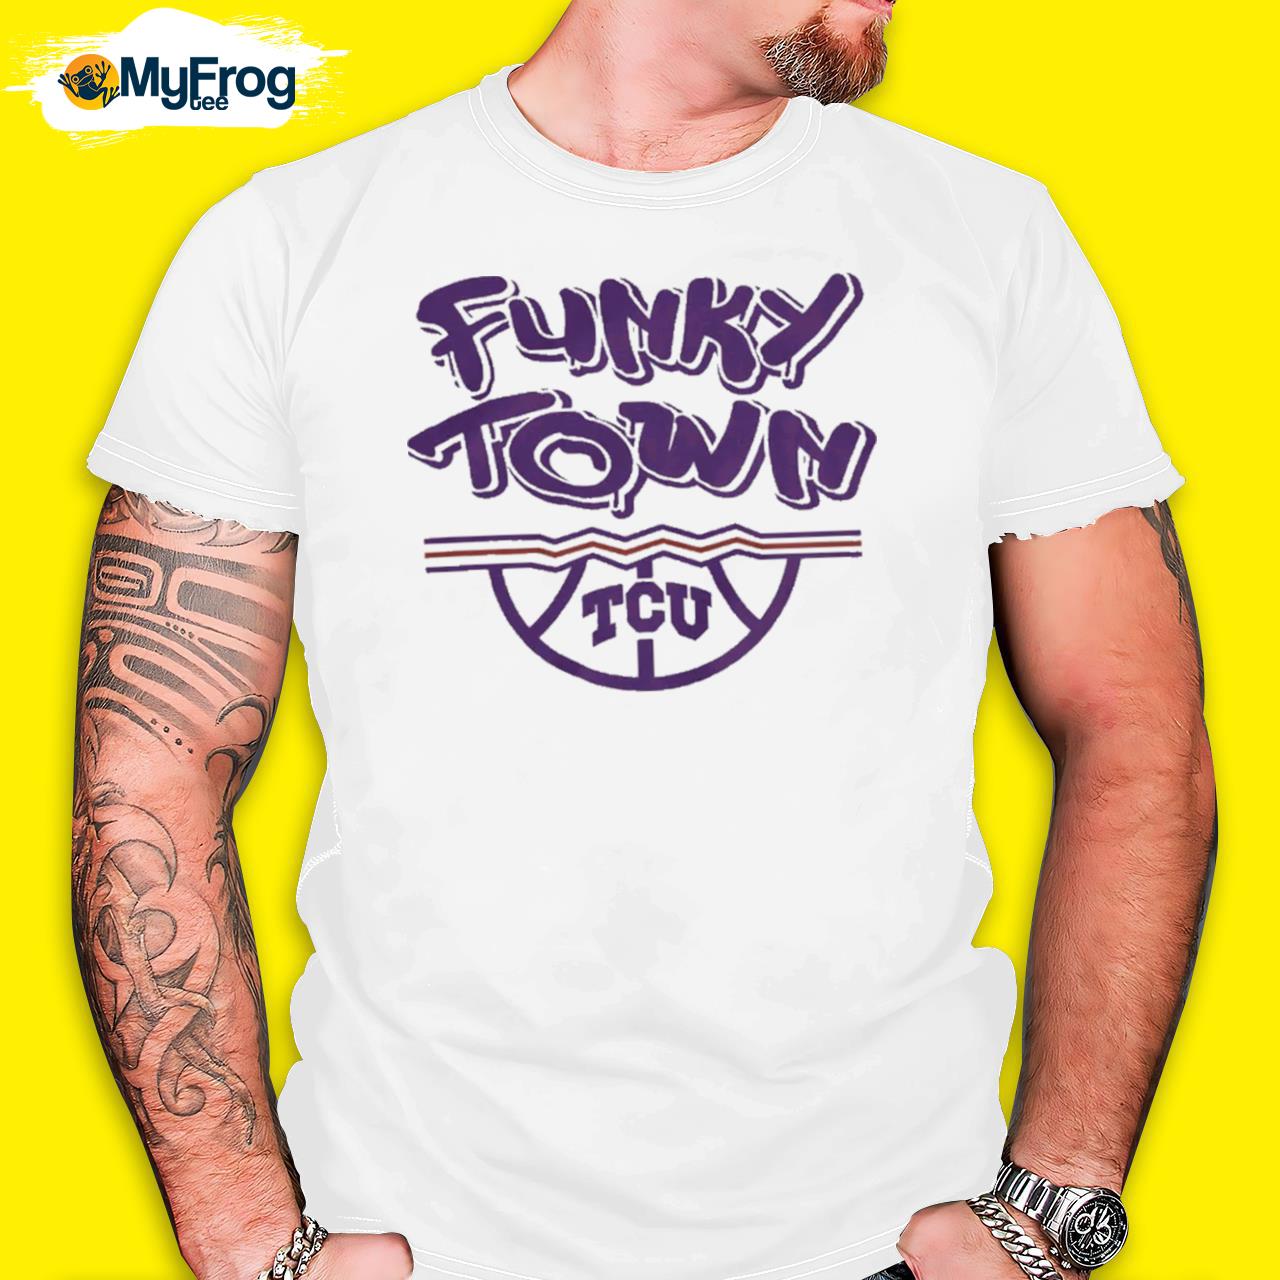 Funky Town Tcu Frog Army Shirt